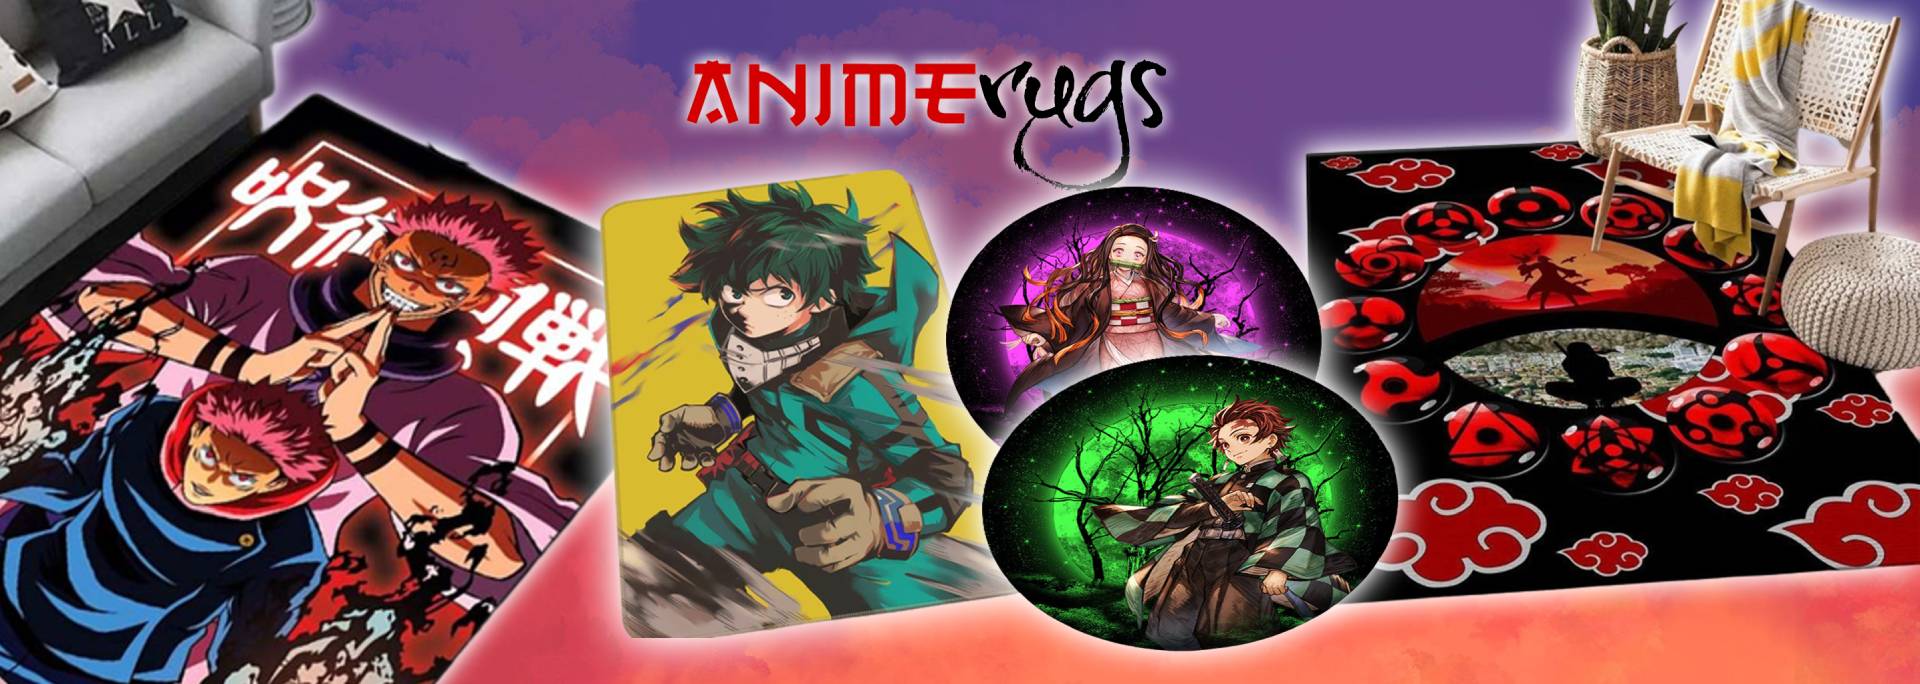 anime rug banner - Anime Rugs Store